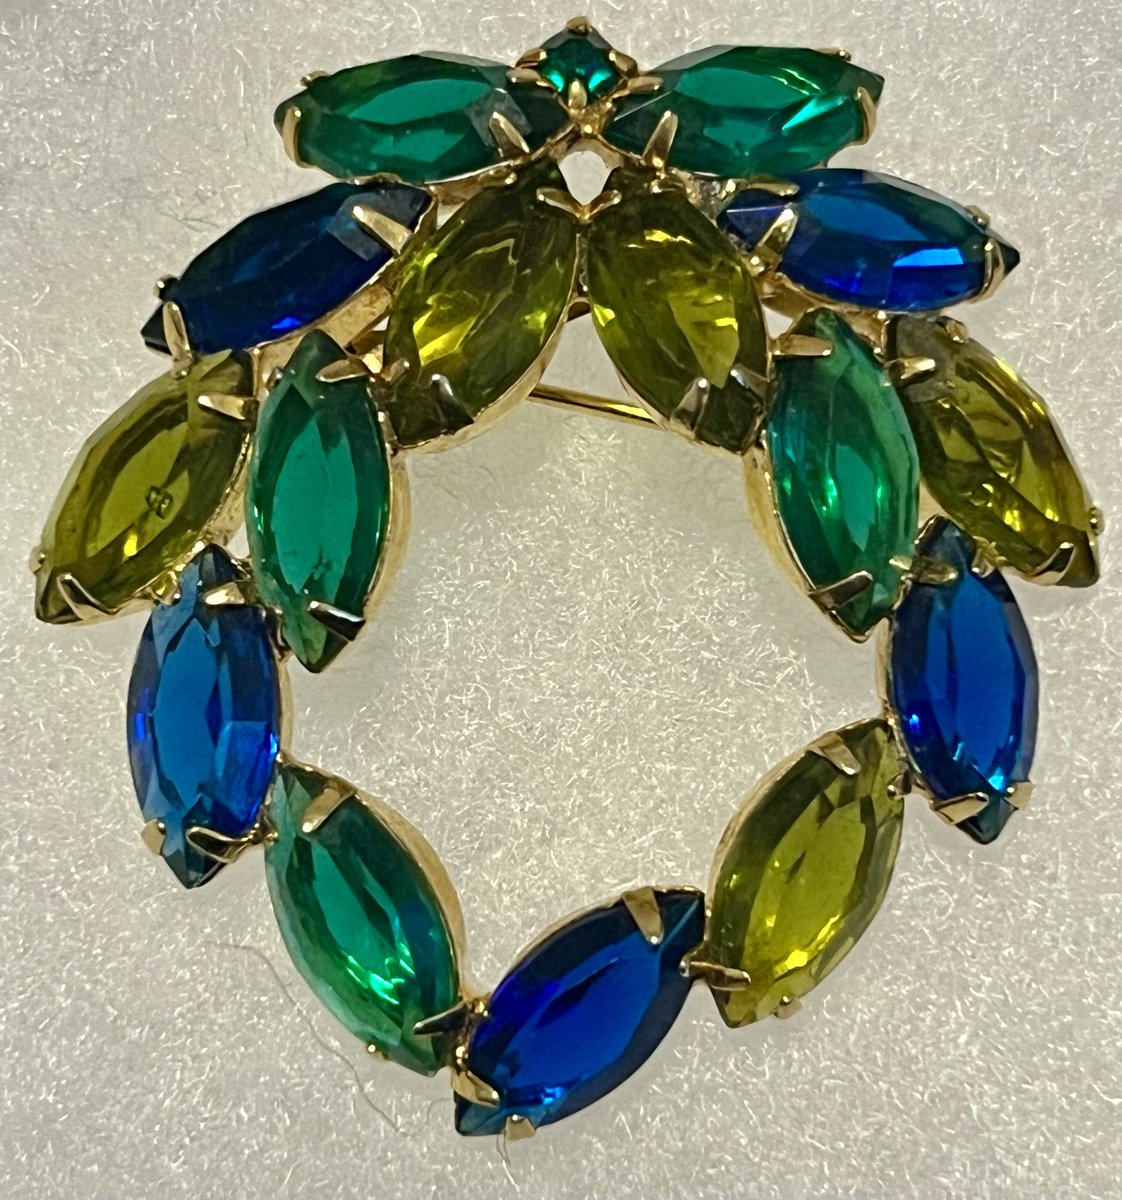 BEAUTIFUL #Midcentury Navette #RhinestoneBrooch Blue Green Wreath Gold Tone #LapelPin FREE SHIP 

#vintage50s #estatejewelry #rhinestonejewelry #vintagejewelry #brooches #vintagebrooch #giftsforher #collectibles #ebayfinds #jewelry #navette #brooch 

ebay.com/itm/2668016846…